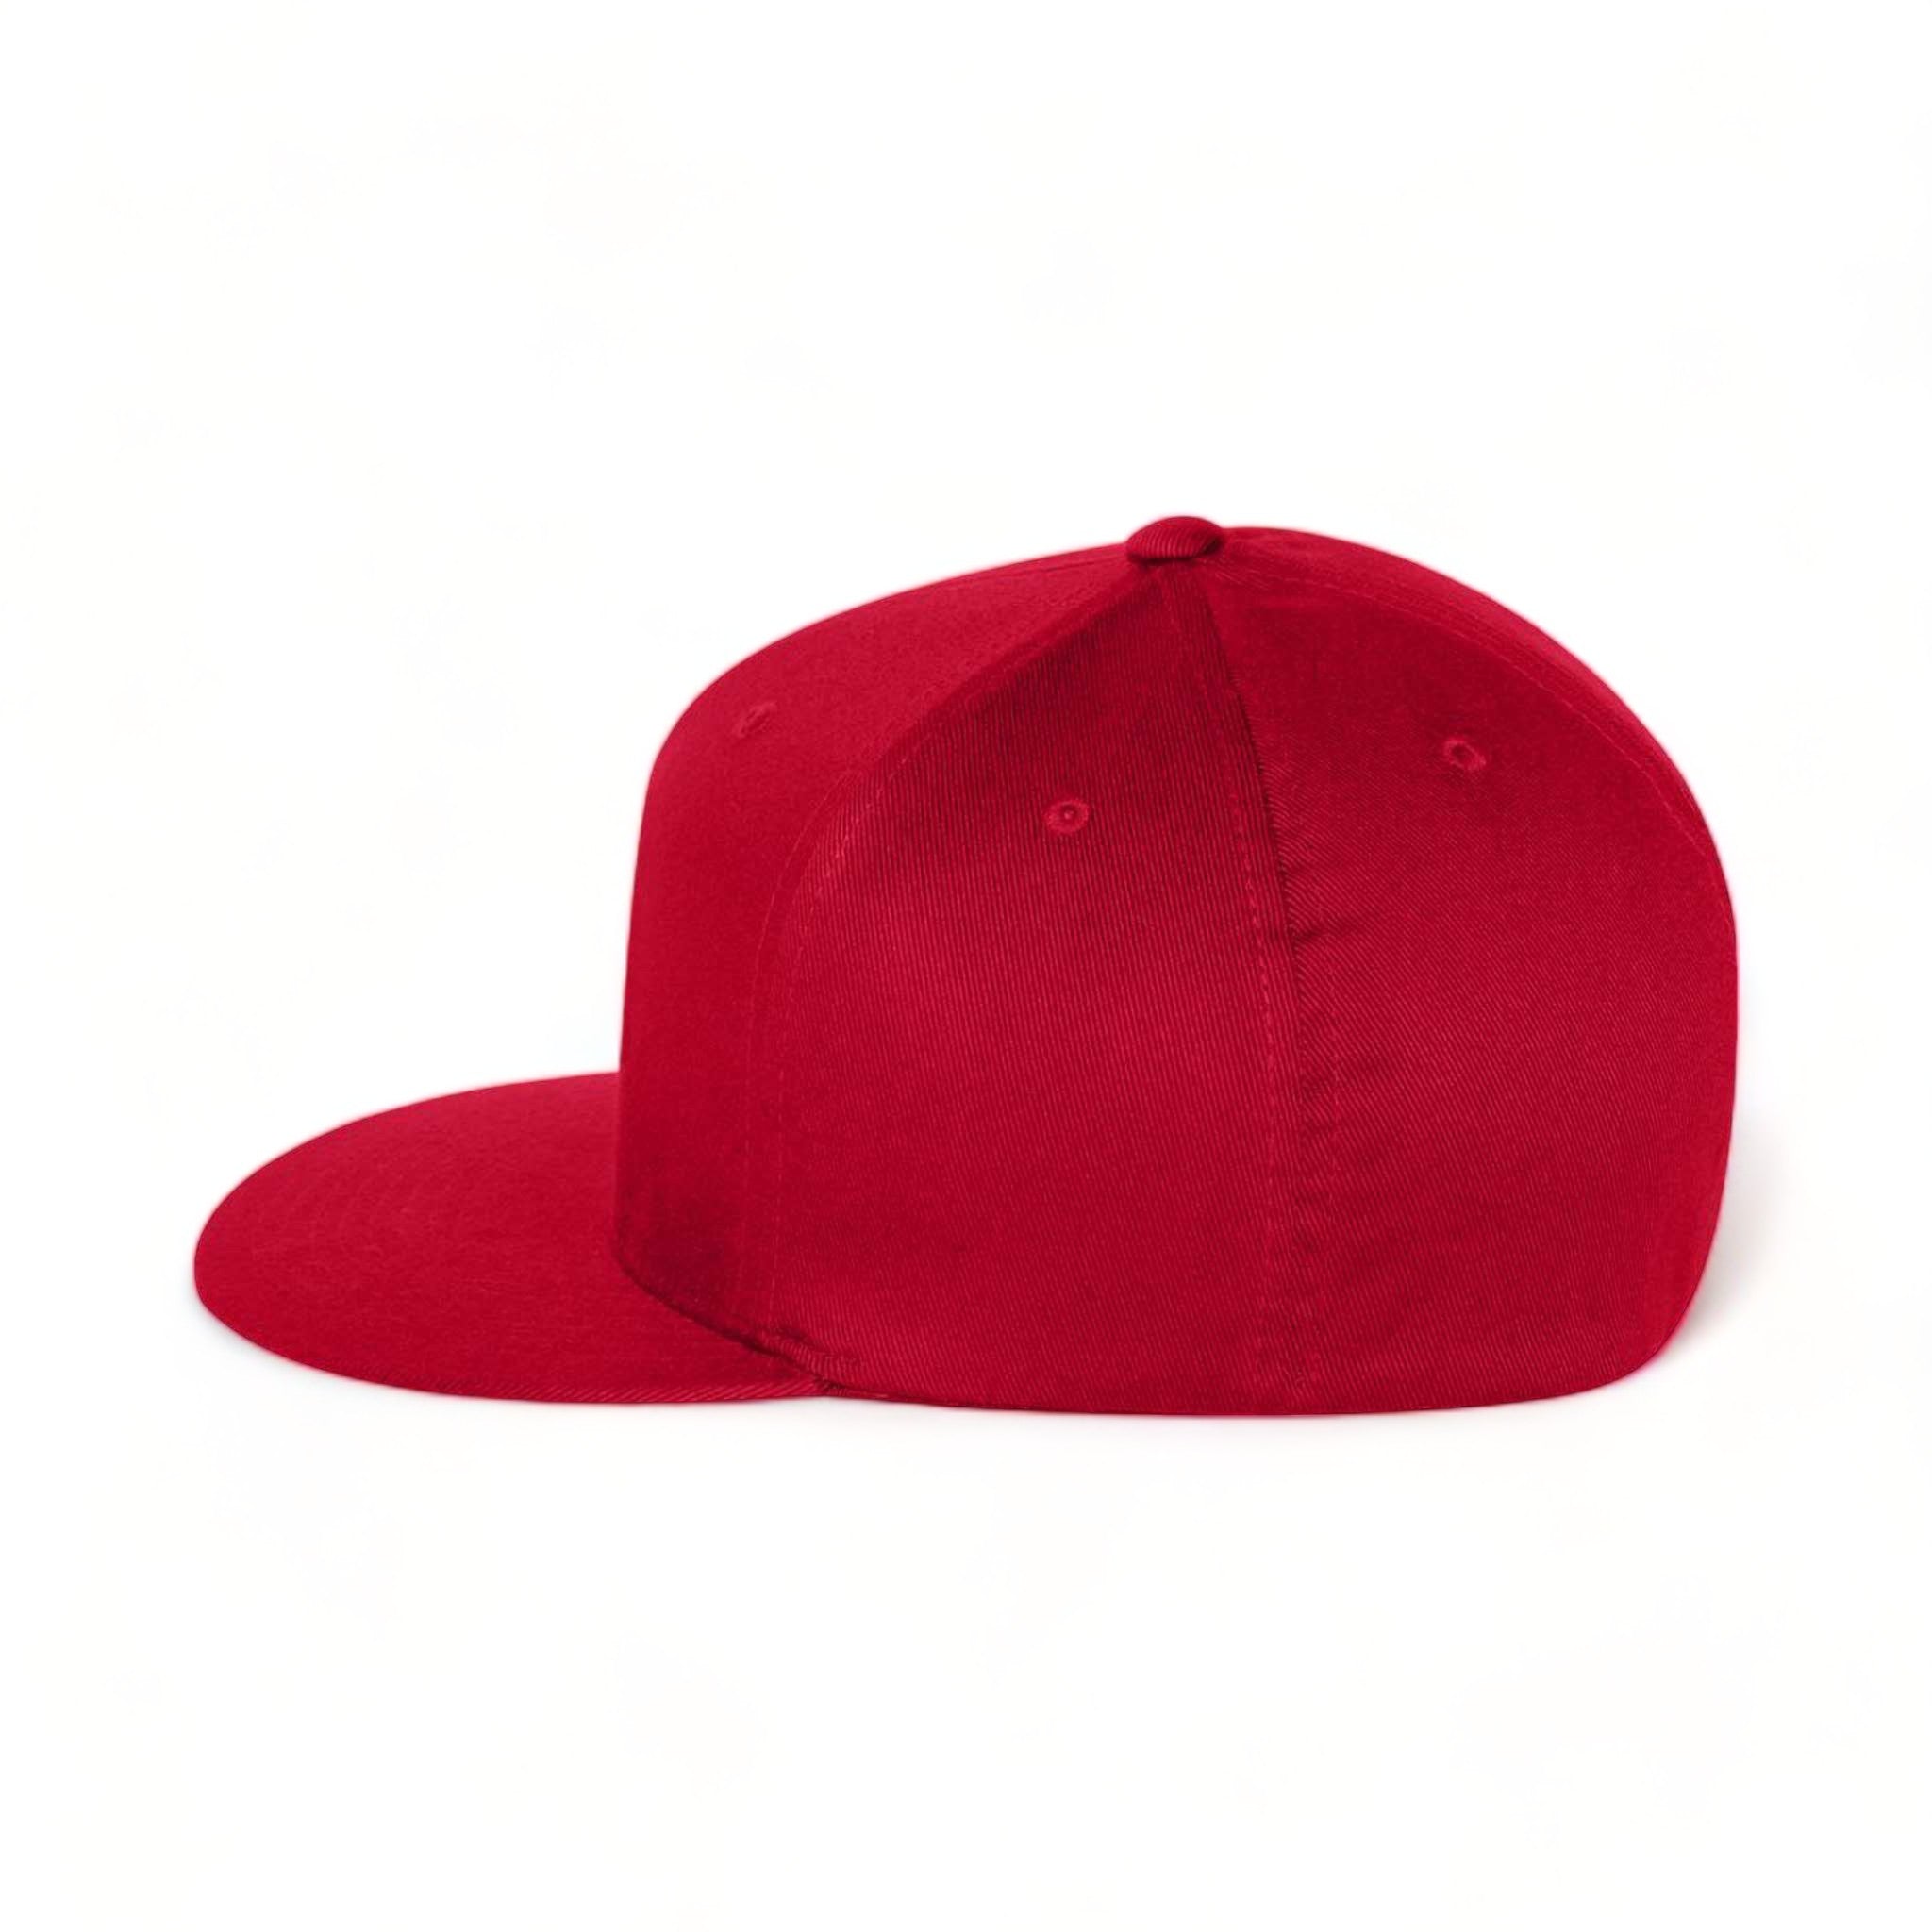 Side view of Flexfit 6297f custom hat in red